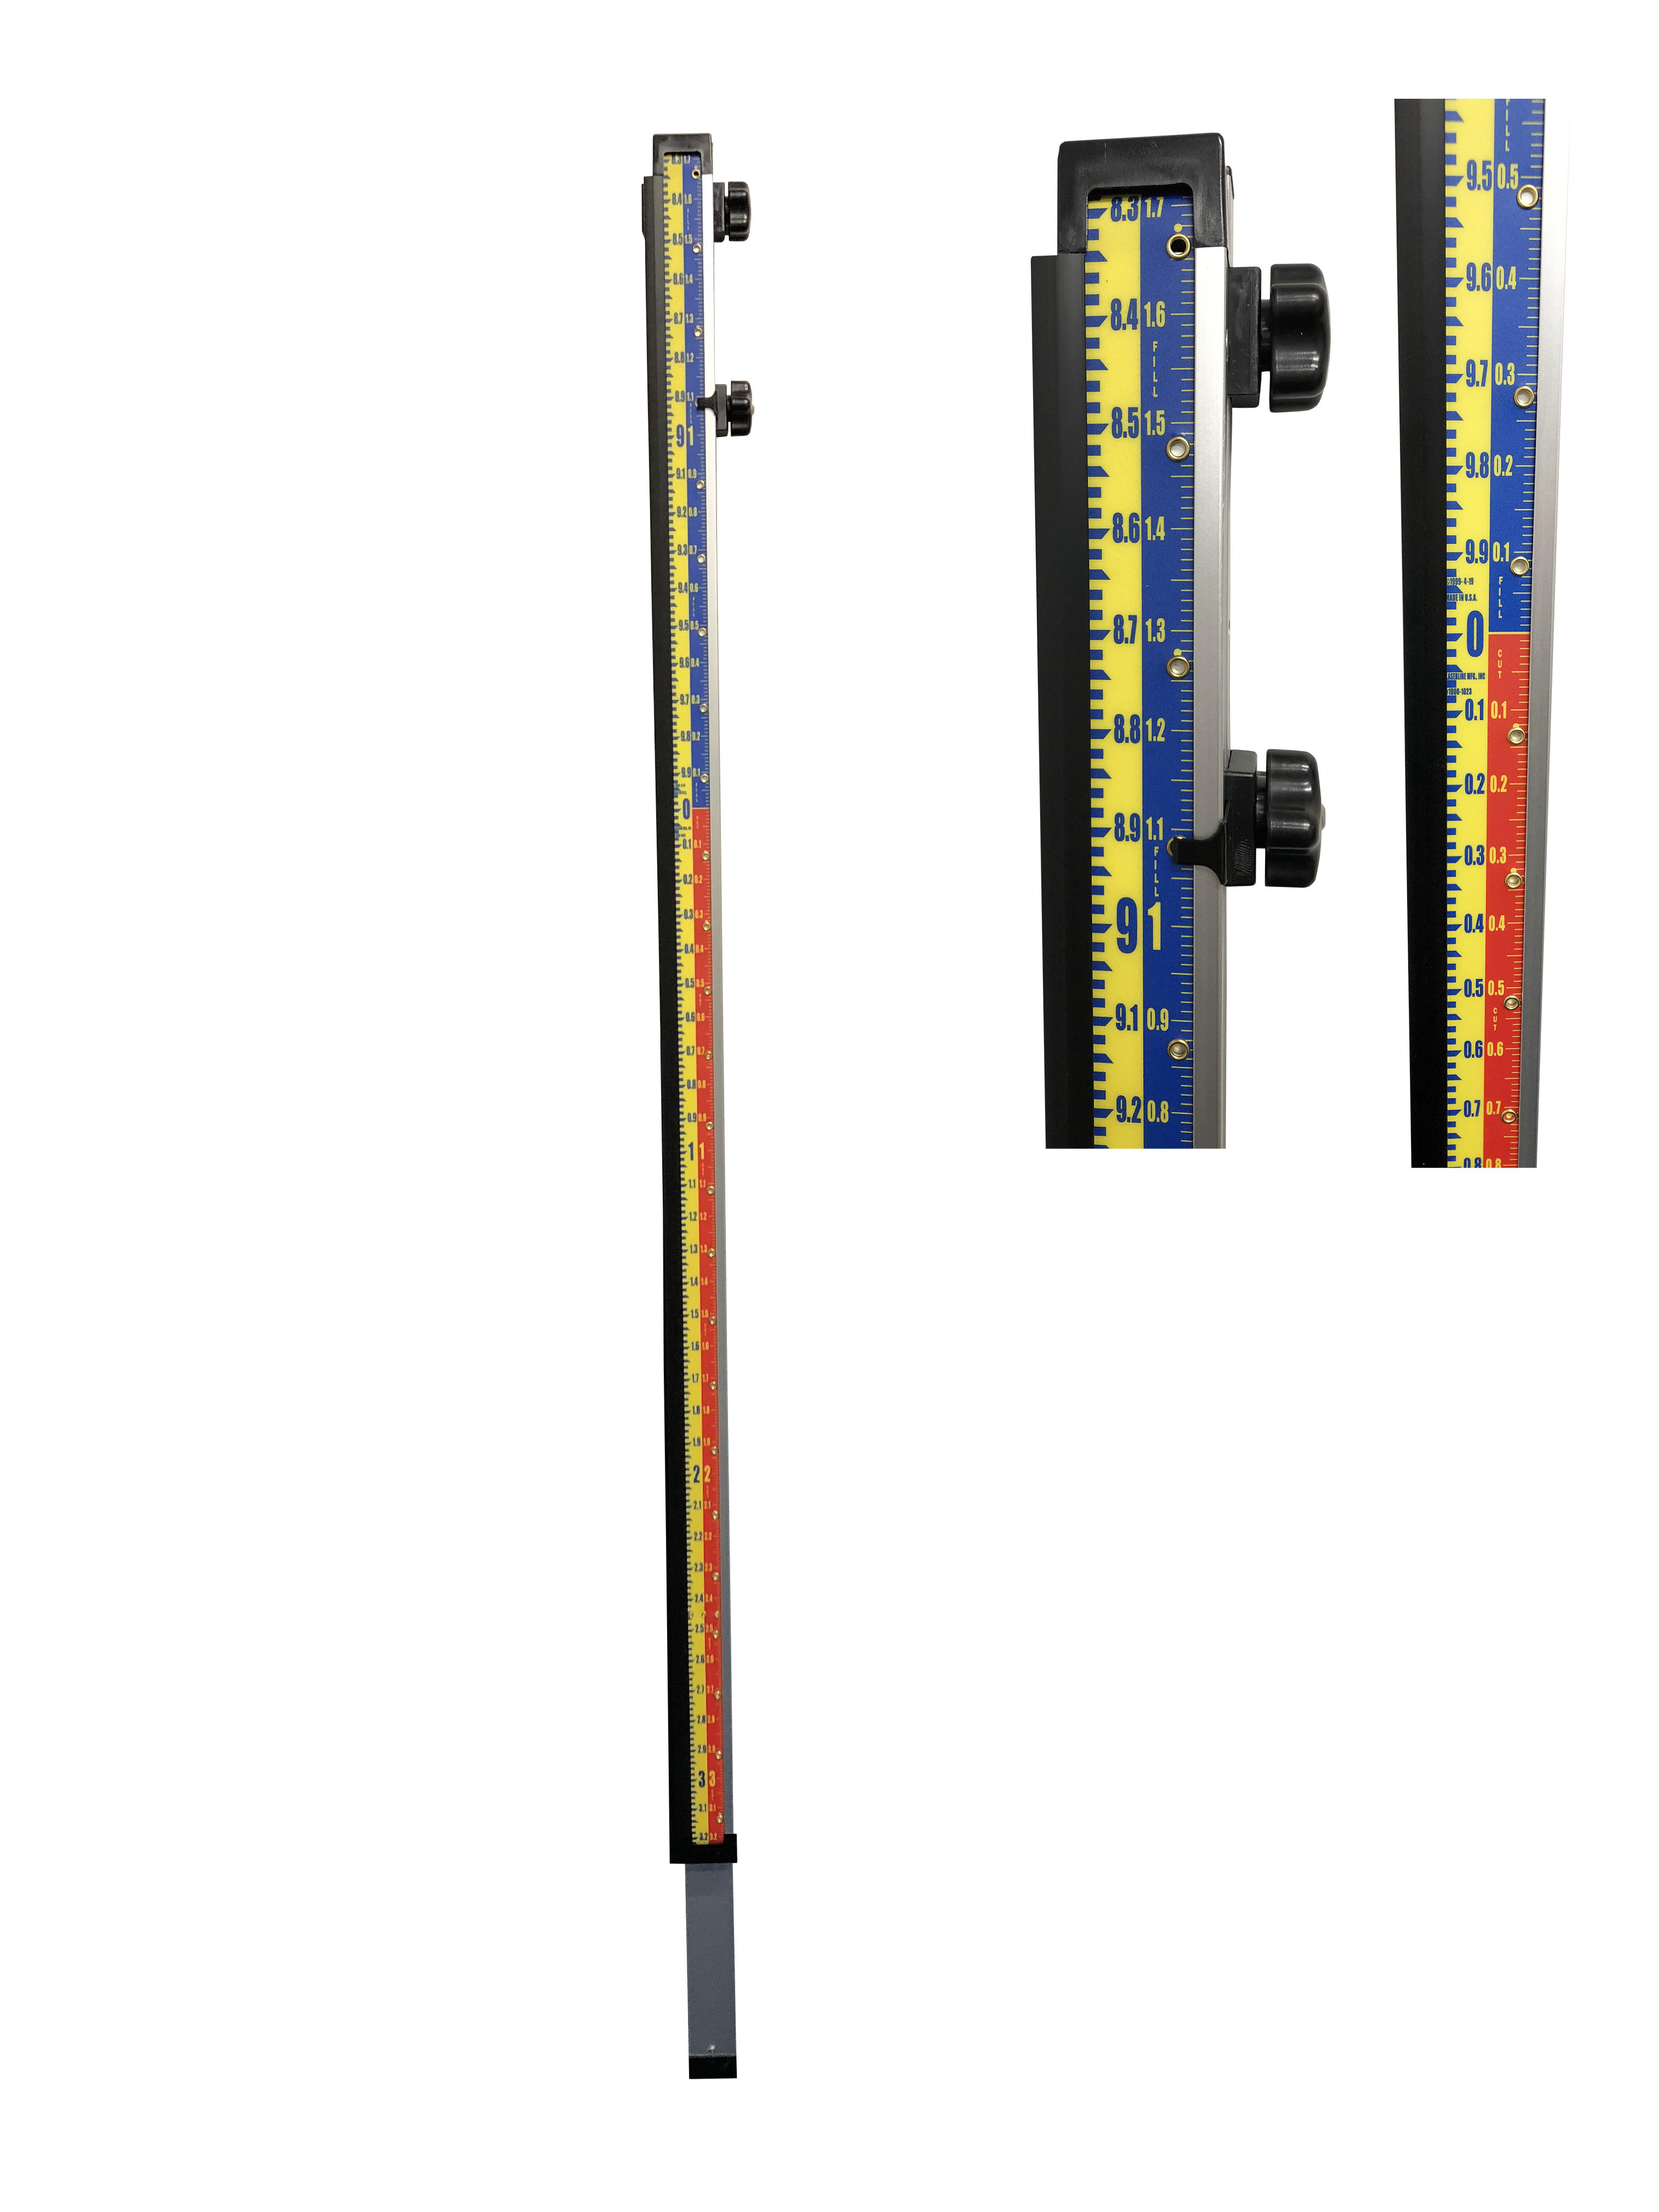 LaserLine GR1000 10' Direct Elevation Reading Rod in Tenths & Cut/Fill